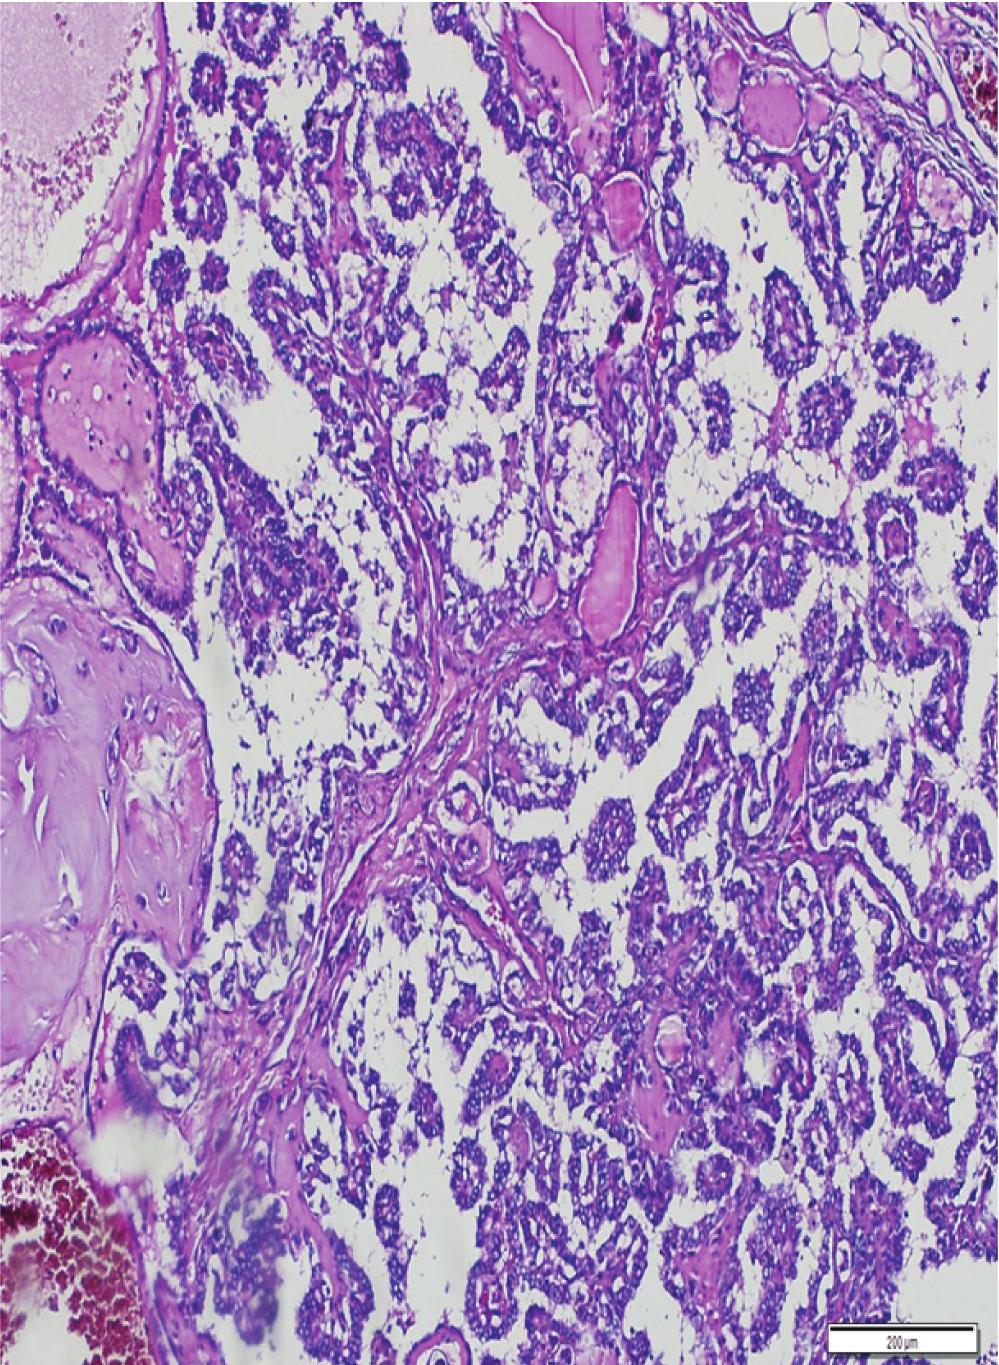 needle aspiration biopsy, T: thyroid, RIA: radioactive iodine ablation, NP: not performed, and PTC: papillary thyroid carcinoma. Figure : Metastatic focus of papillary carcinoma.